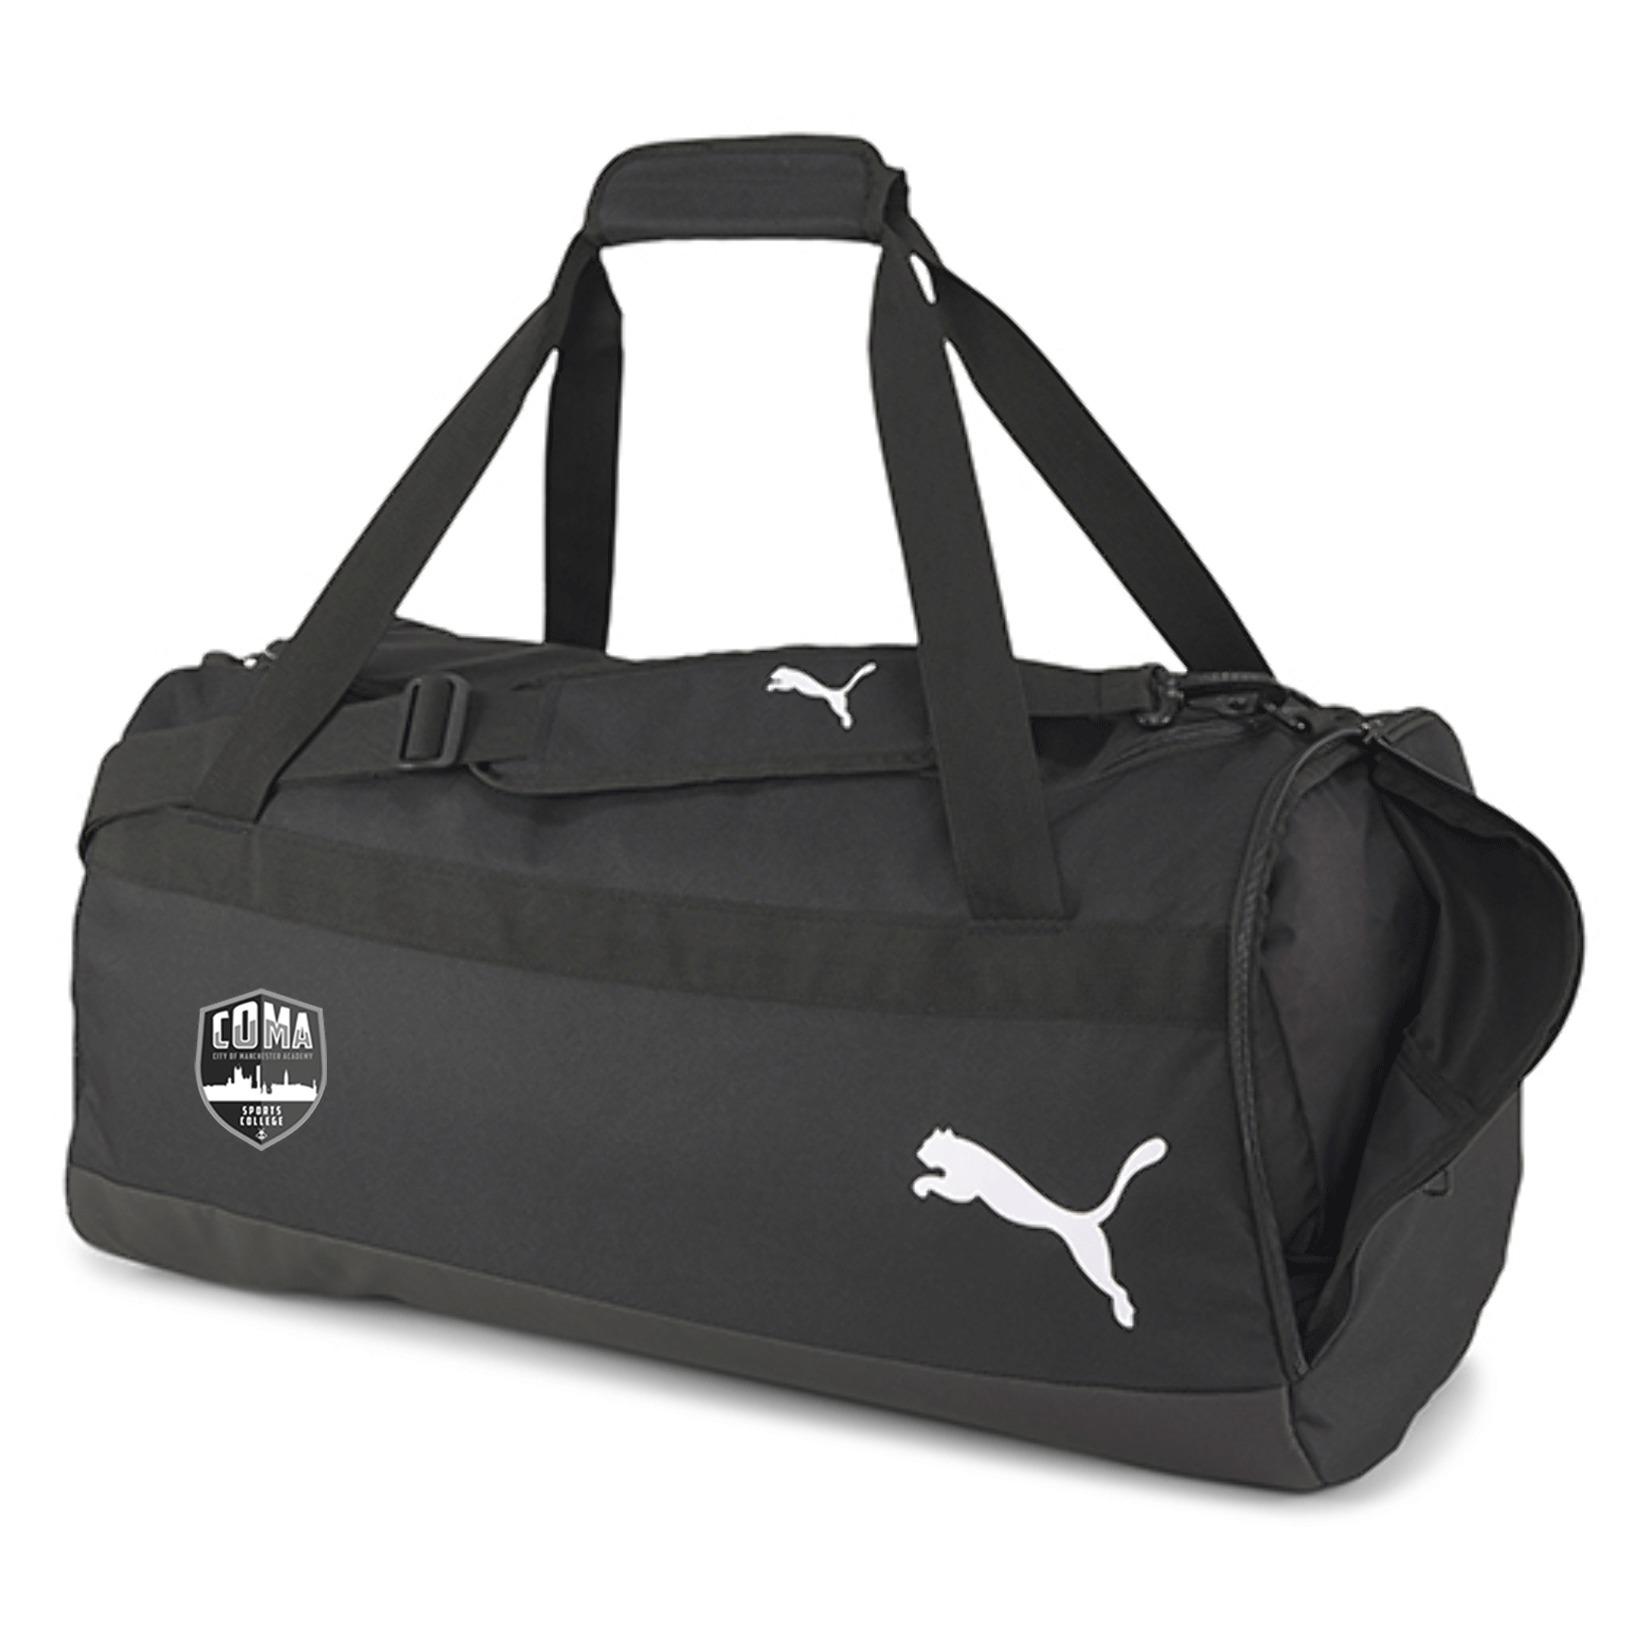 Puma Goal Holdall Team Bag - Medium